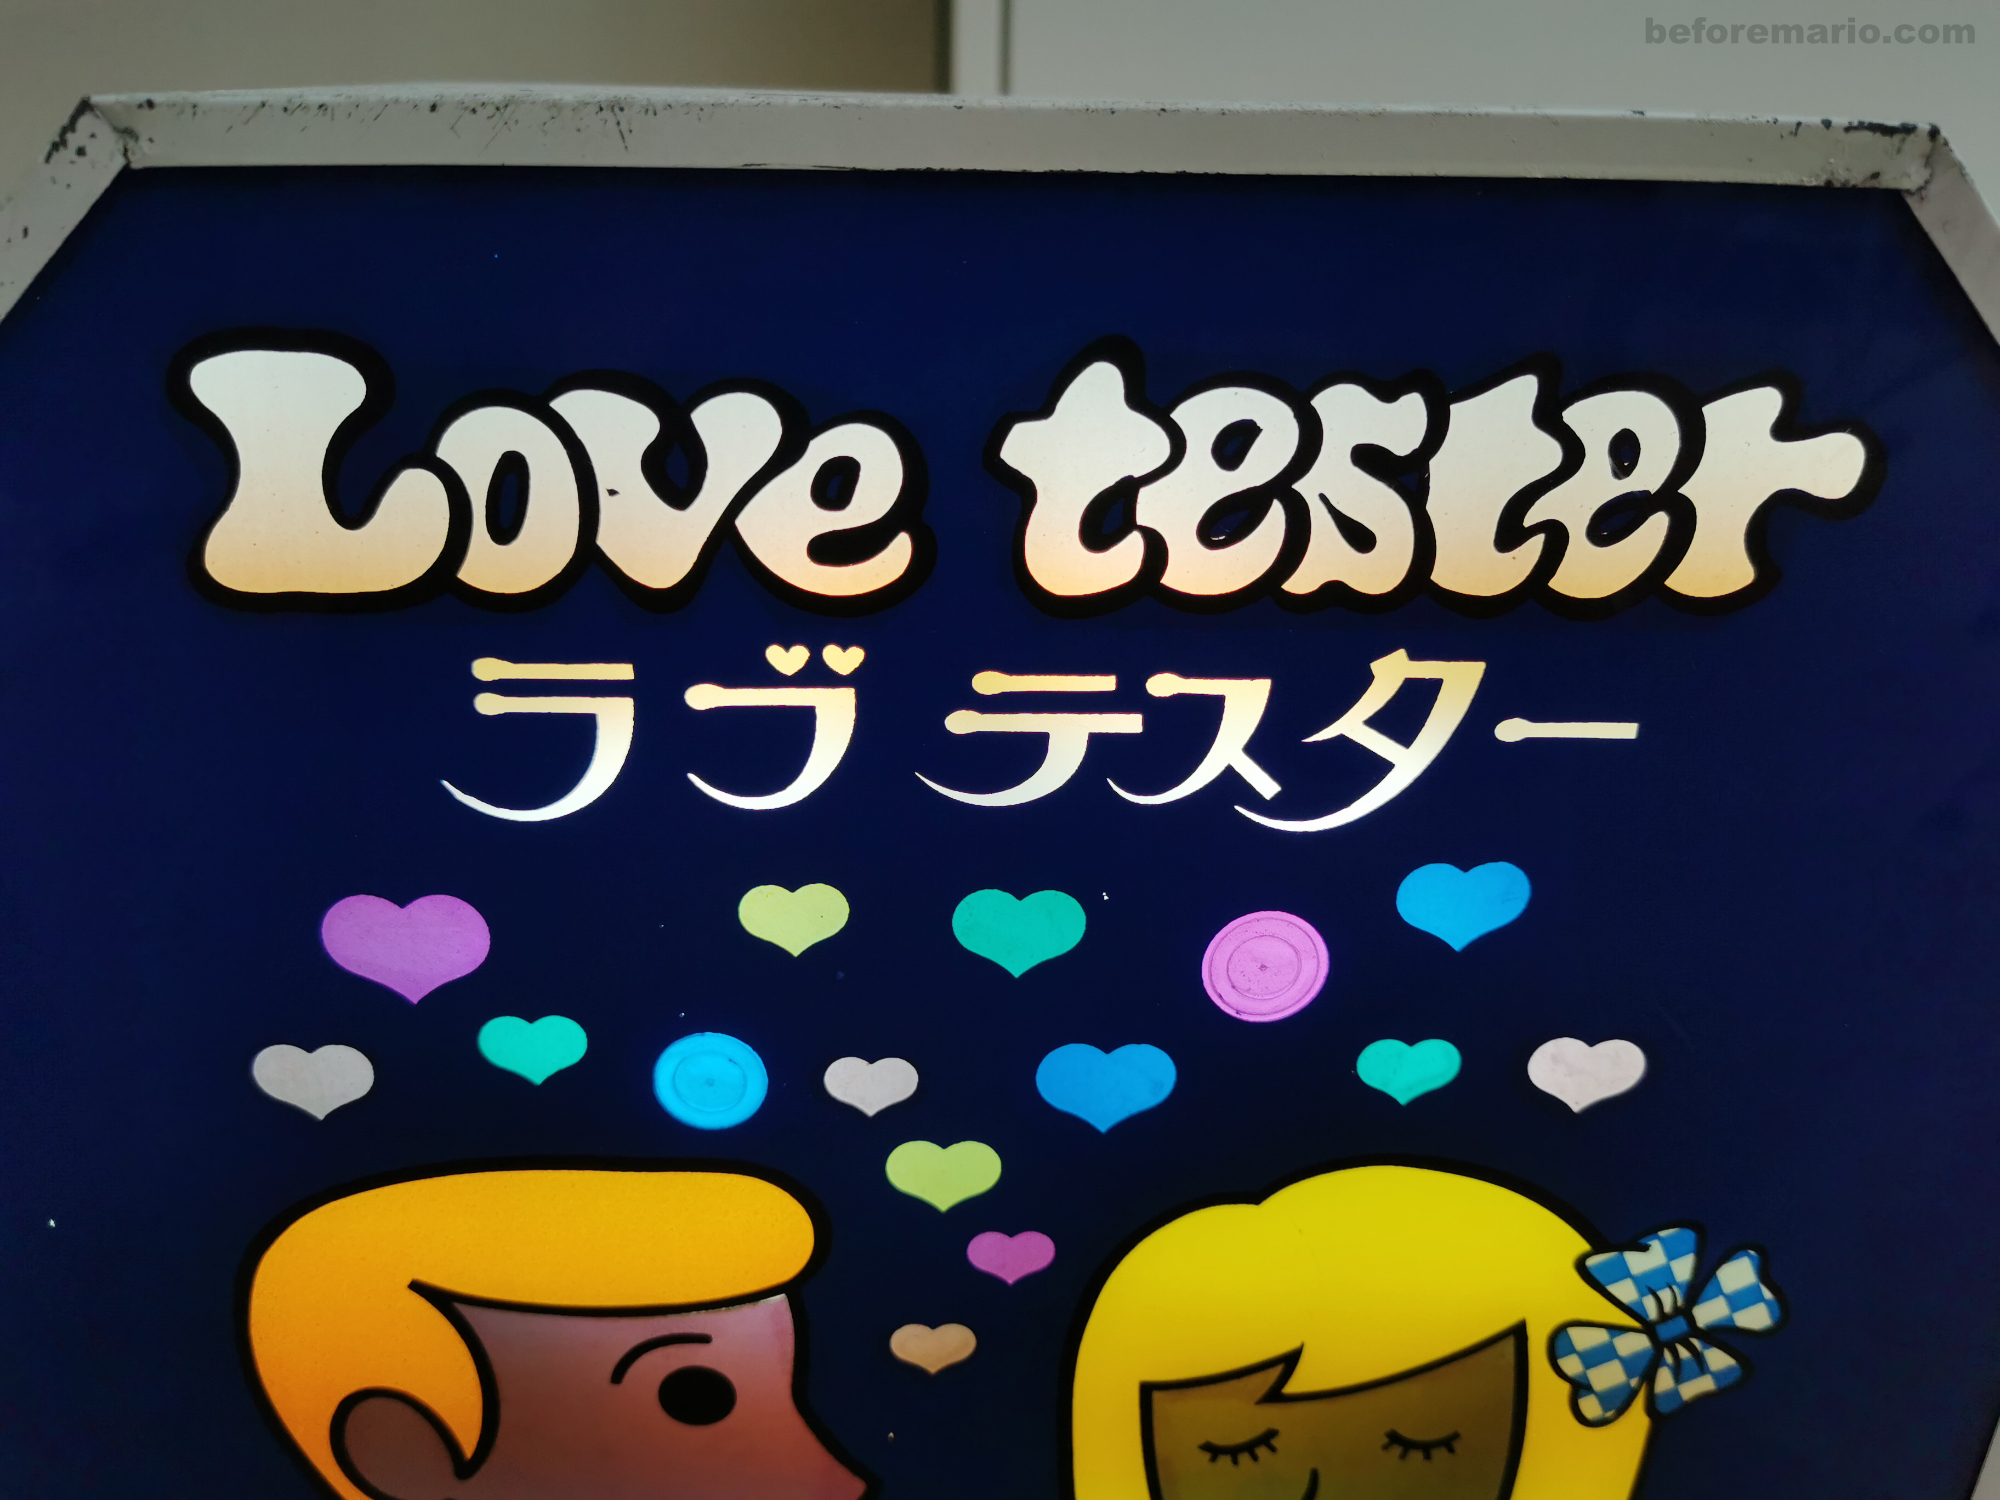 beforemario: Nintendo Love Tester (ラブテスター) remakes by Taito